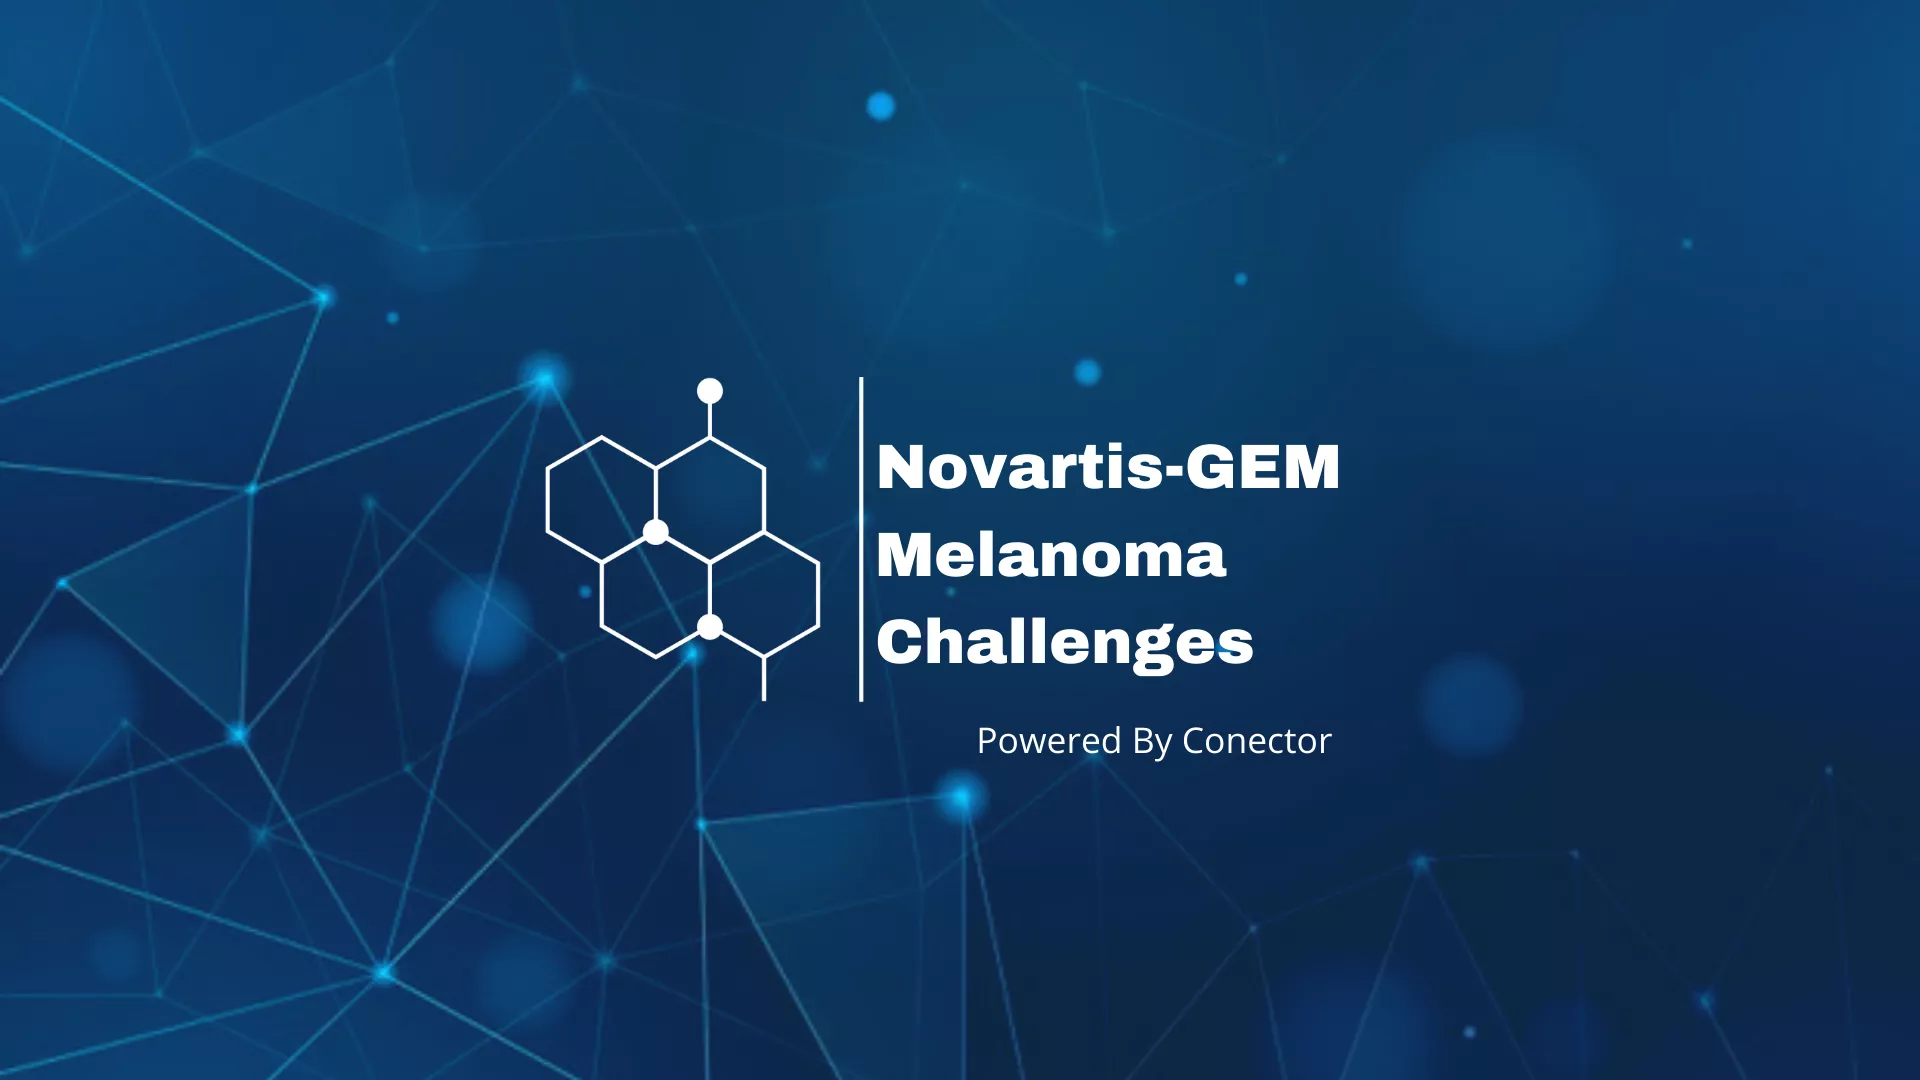 NOVARTIS-GEM MELANOMA CHALLENGE